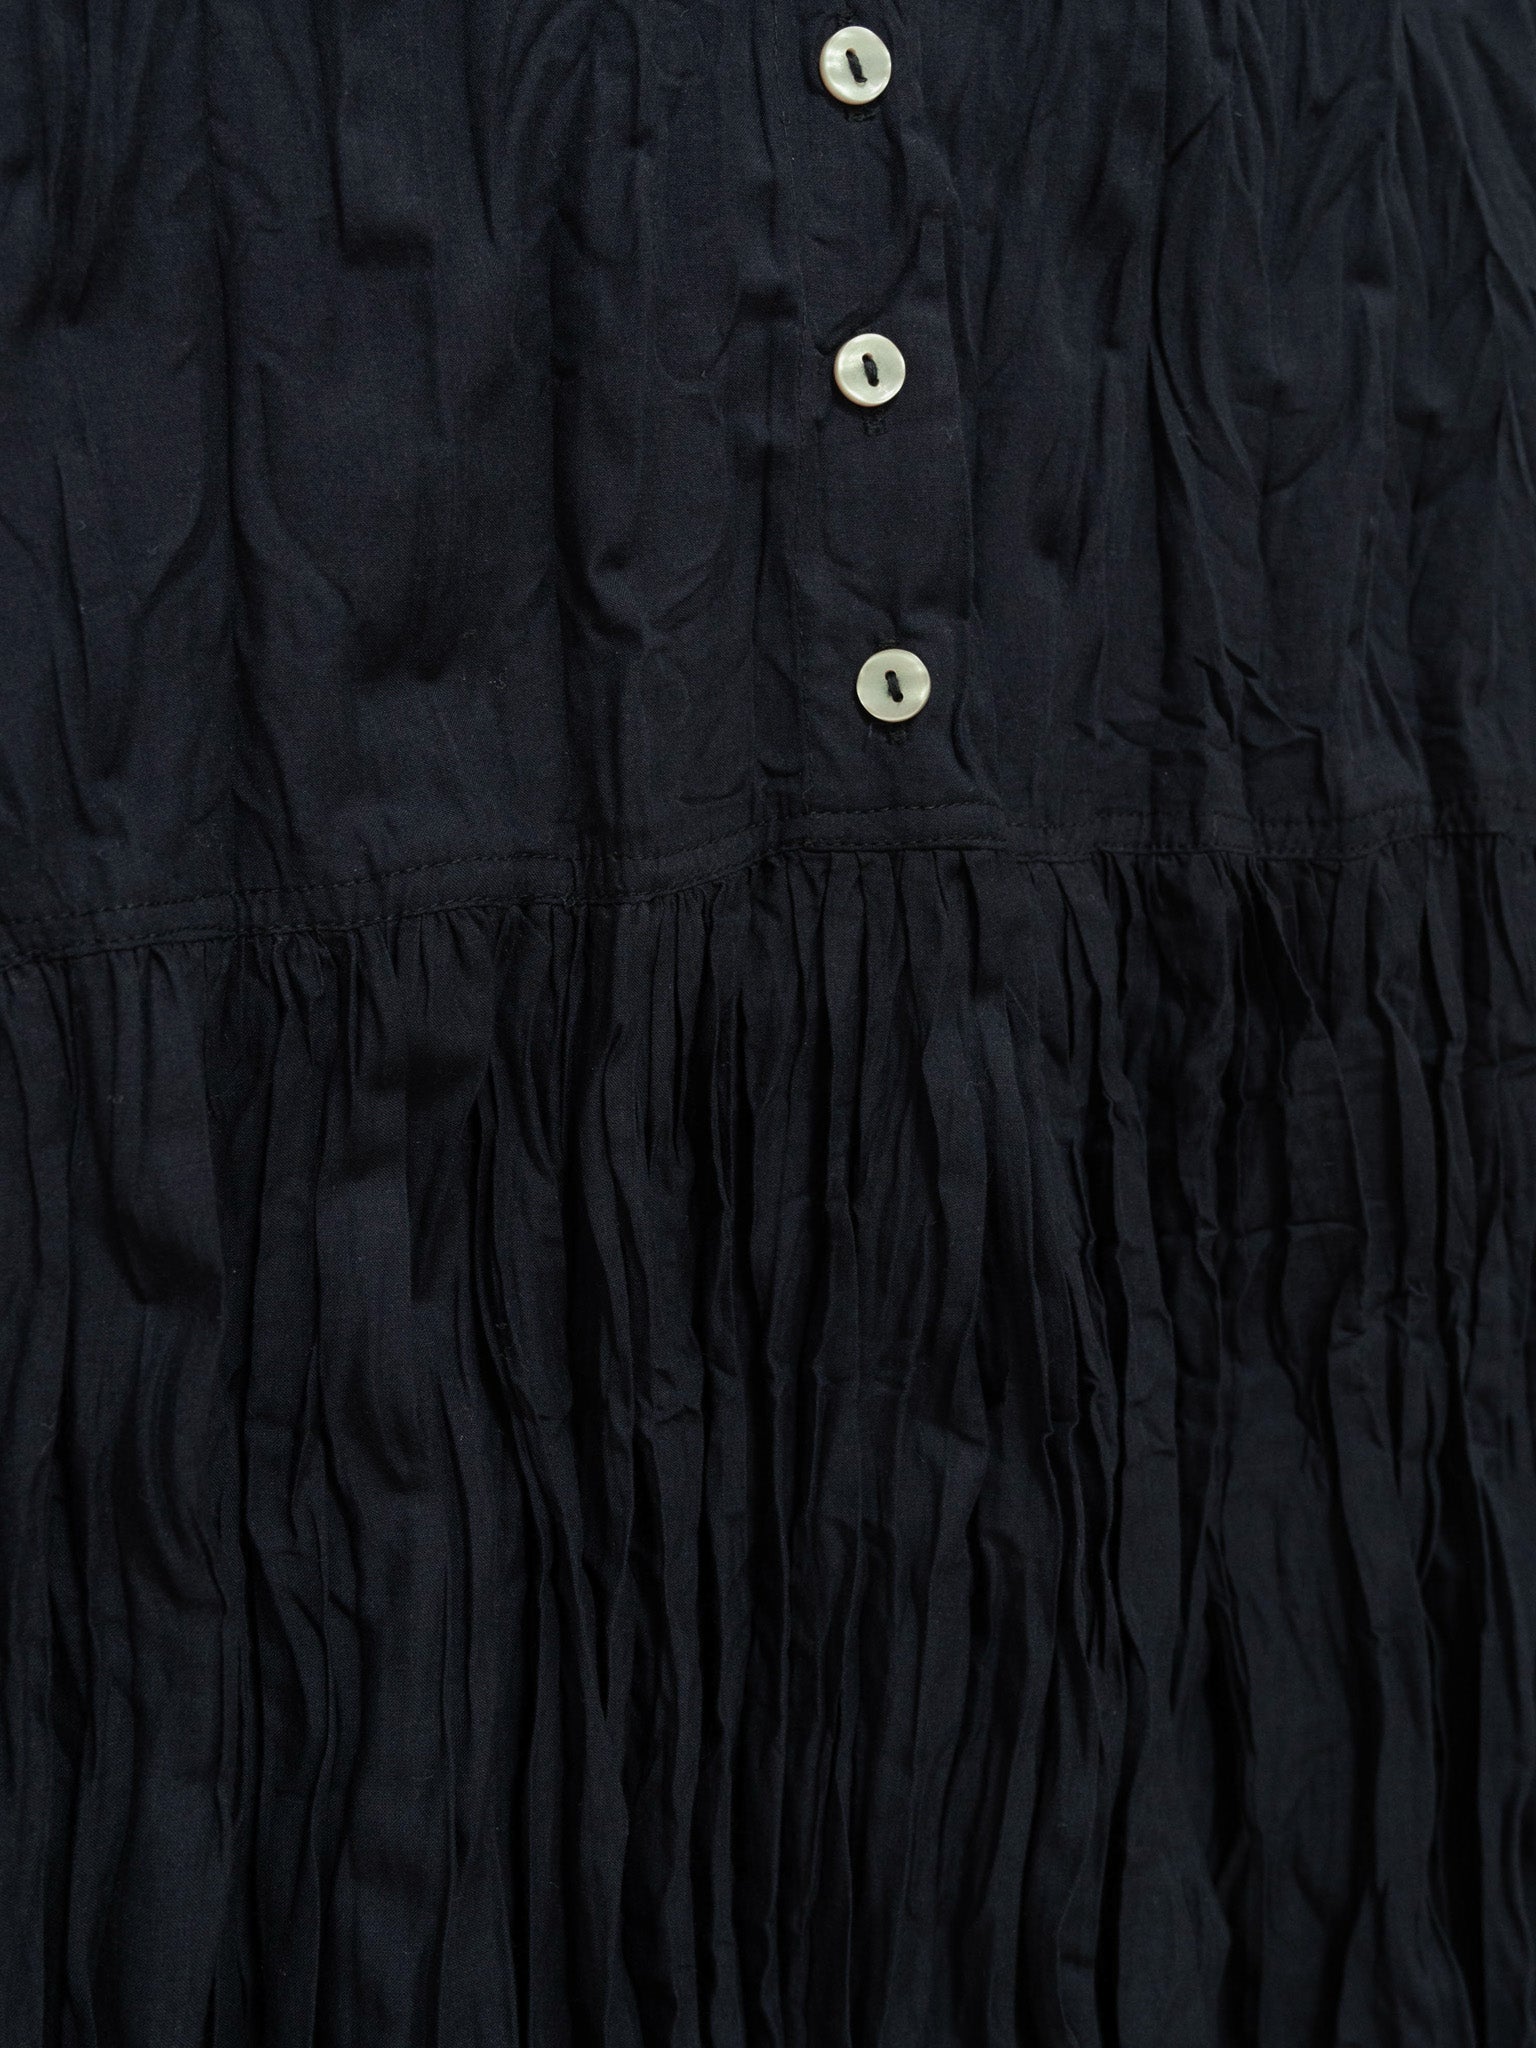 Namu Shop - ICHI Crinkle Sleeveless Dress - Black